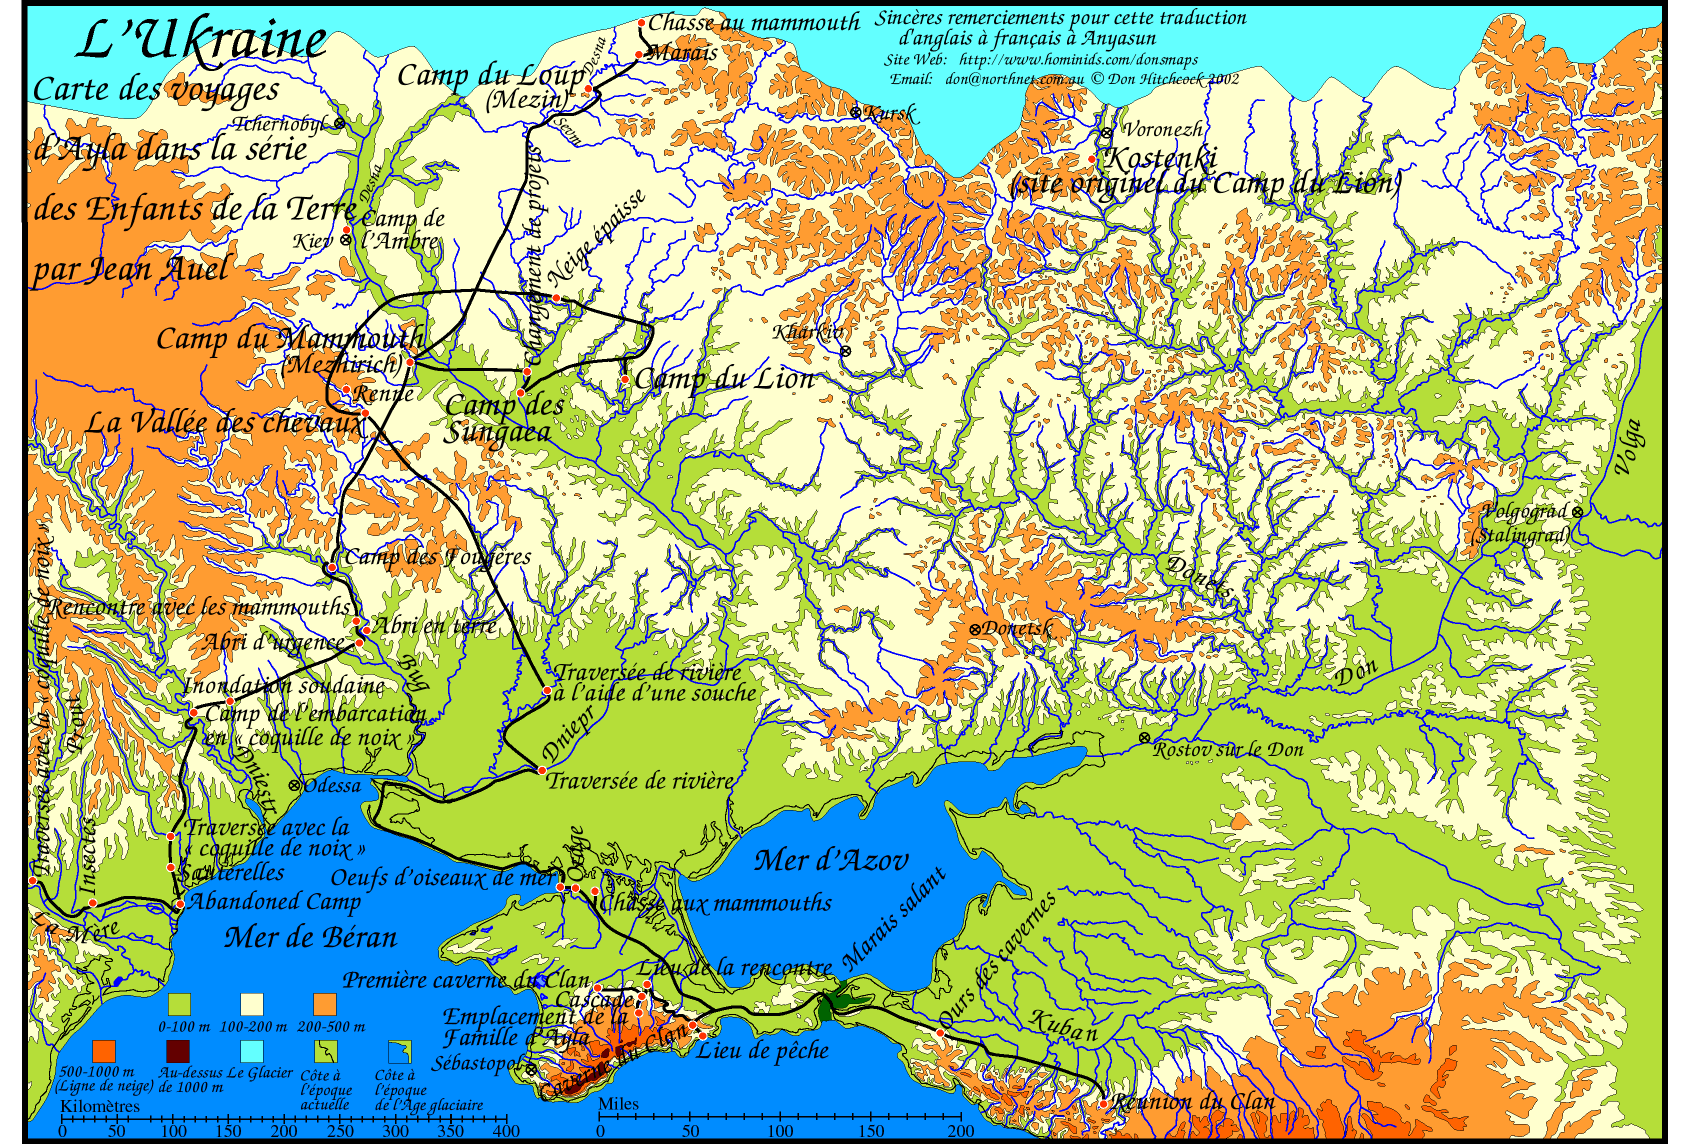 map of the Ukraine